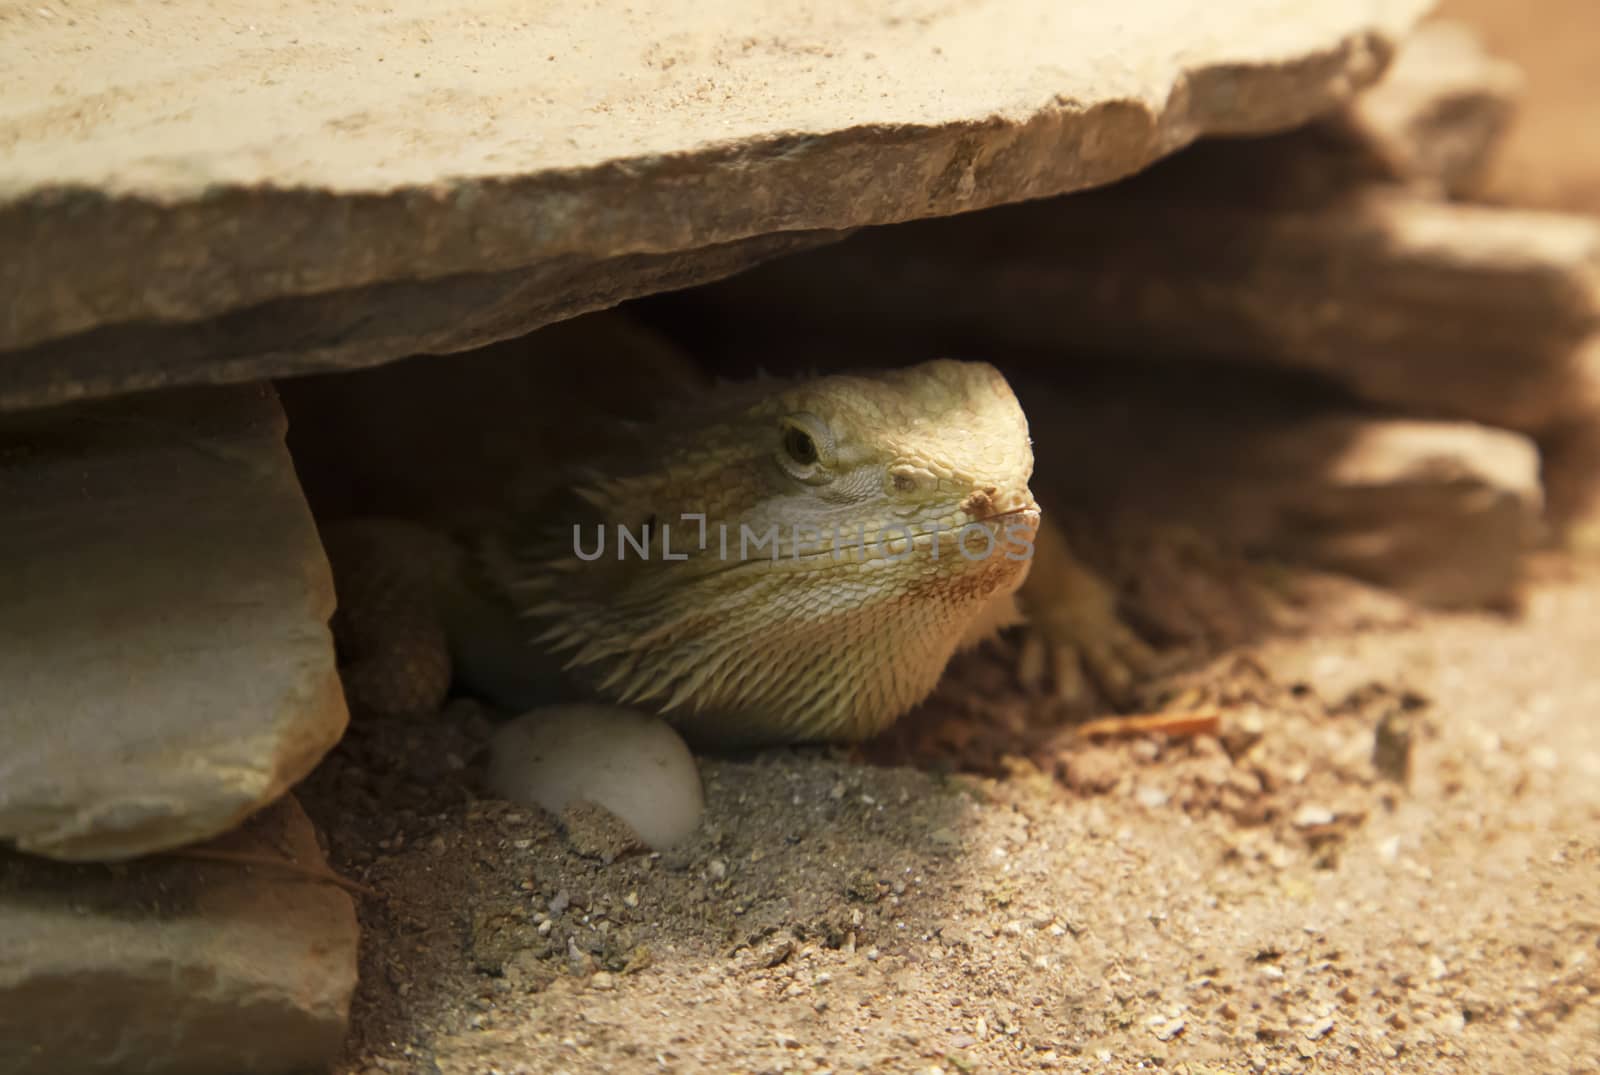 Pogona vitticeps lizard also known as bearded dragon hiding under a rock